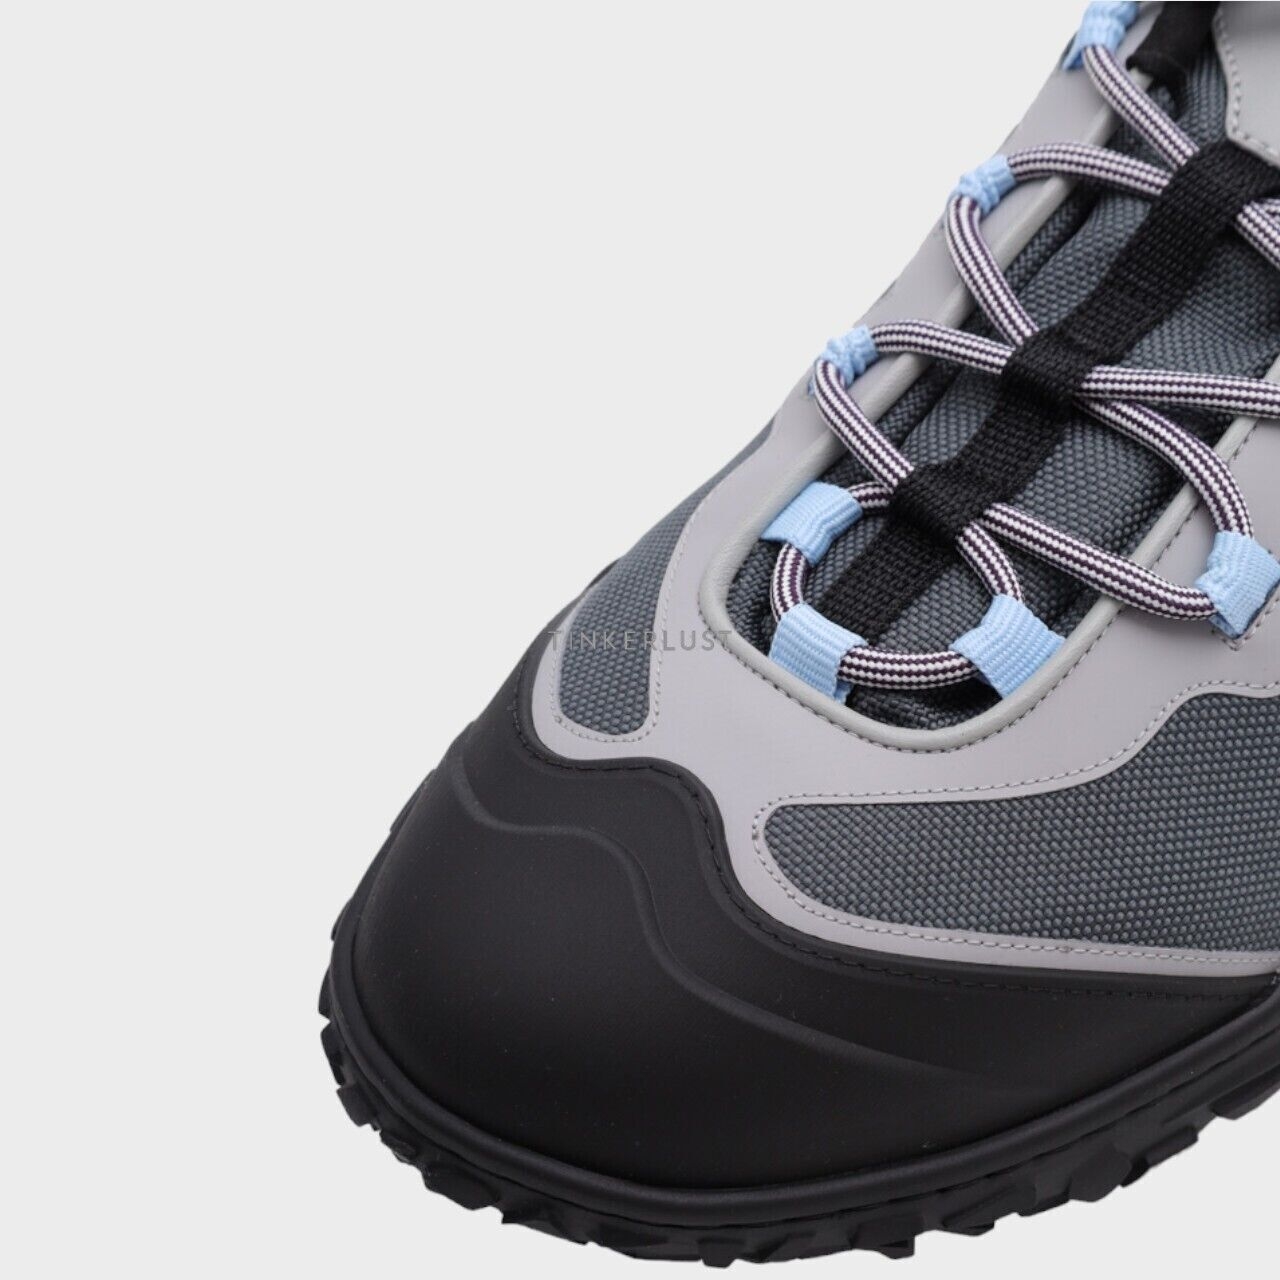 Christian Dior Diorizon Mesh in Grey/Grey Hiking Sneakers